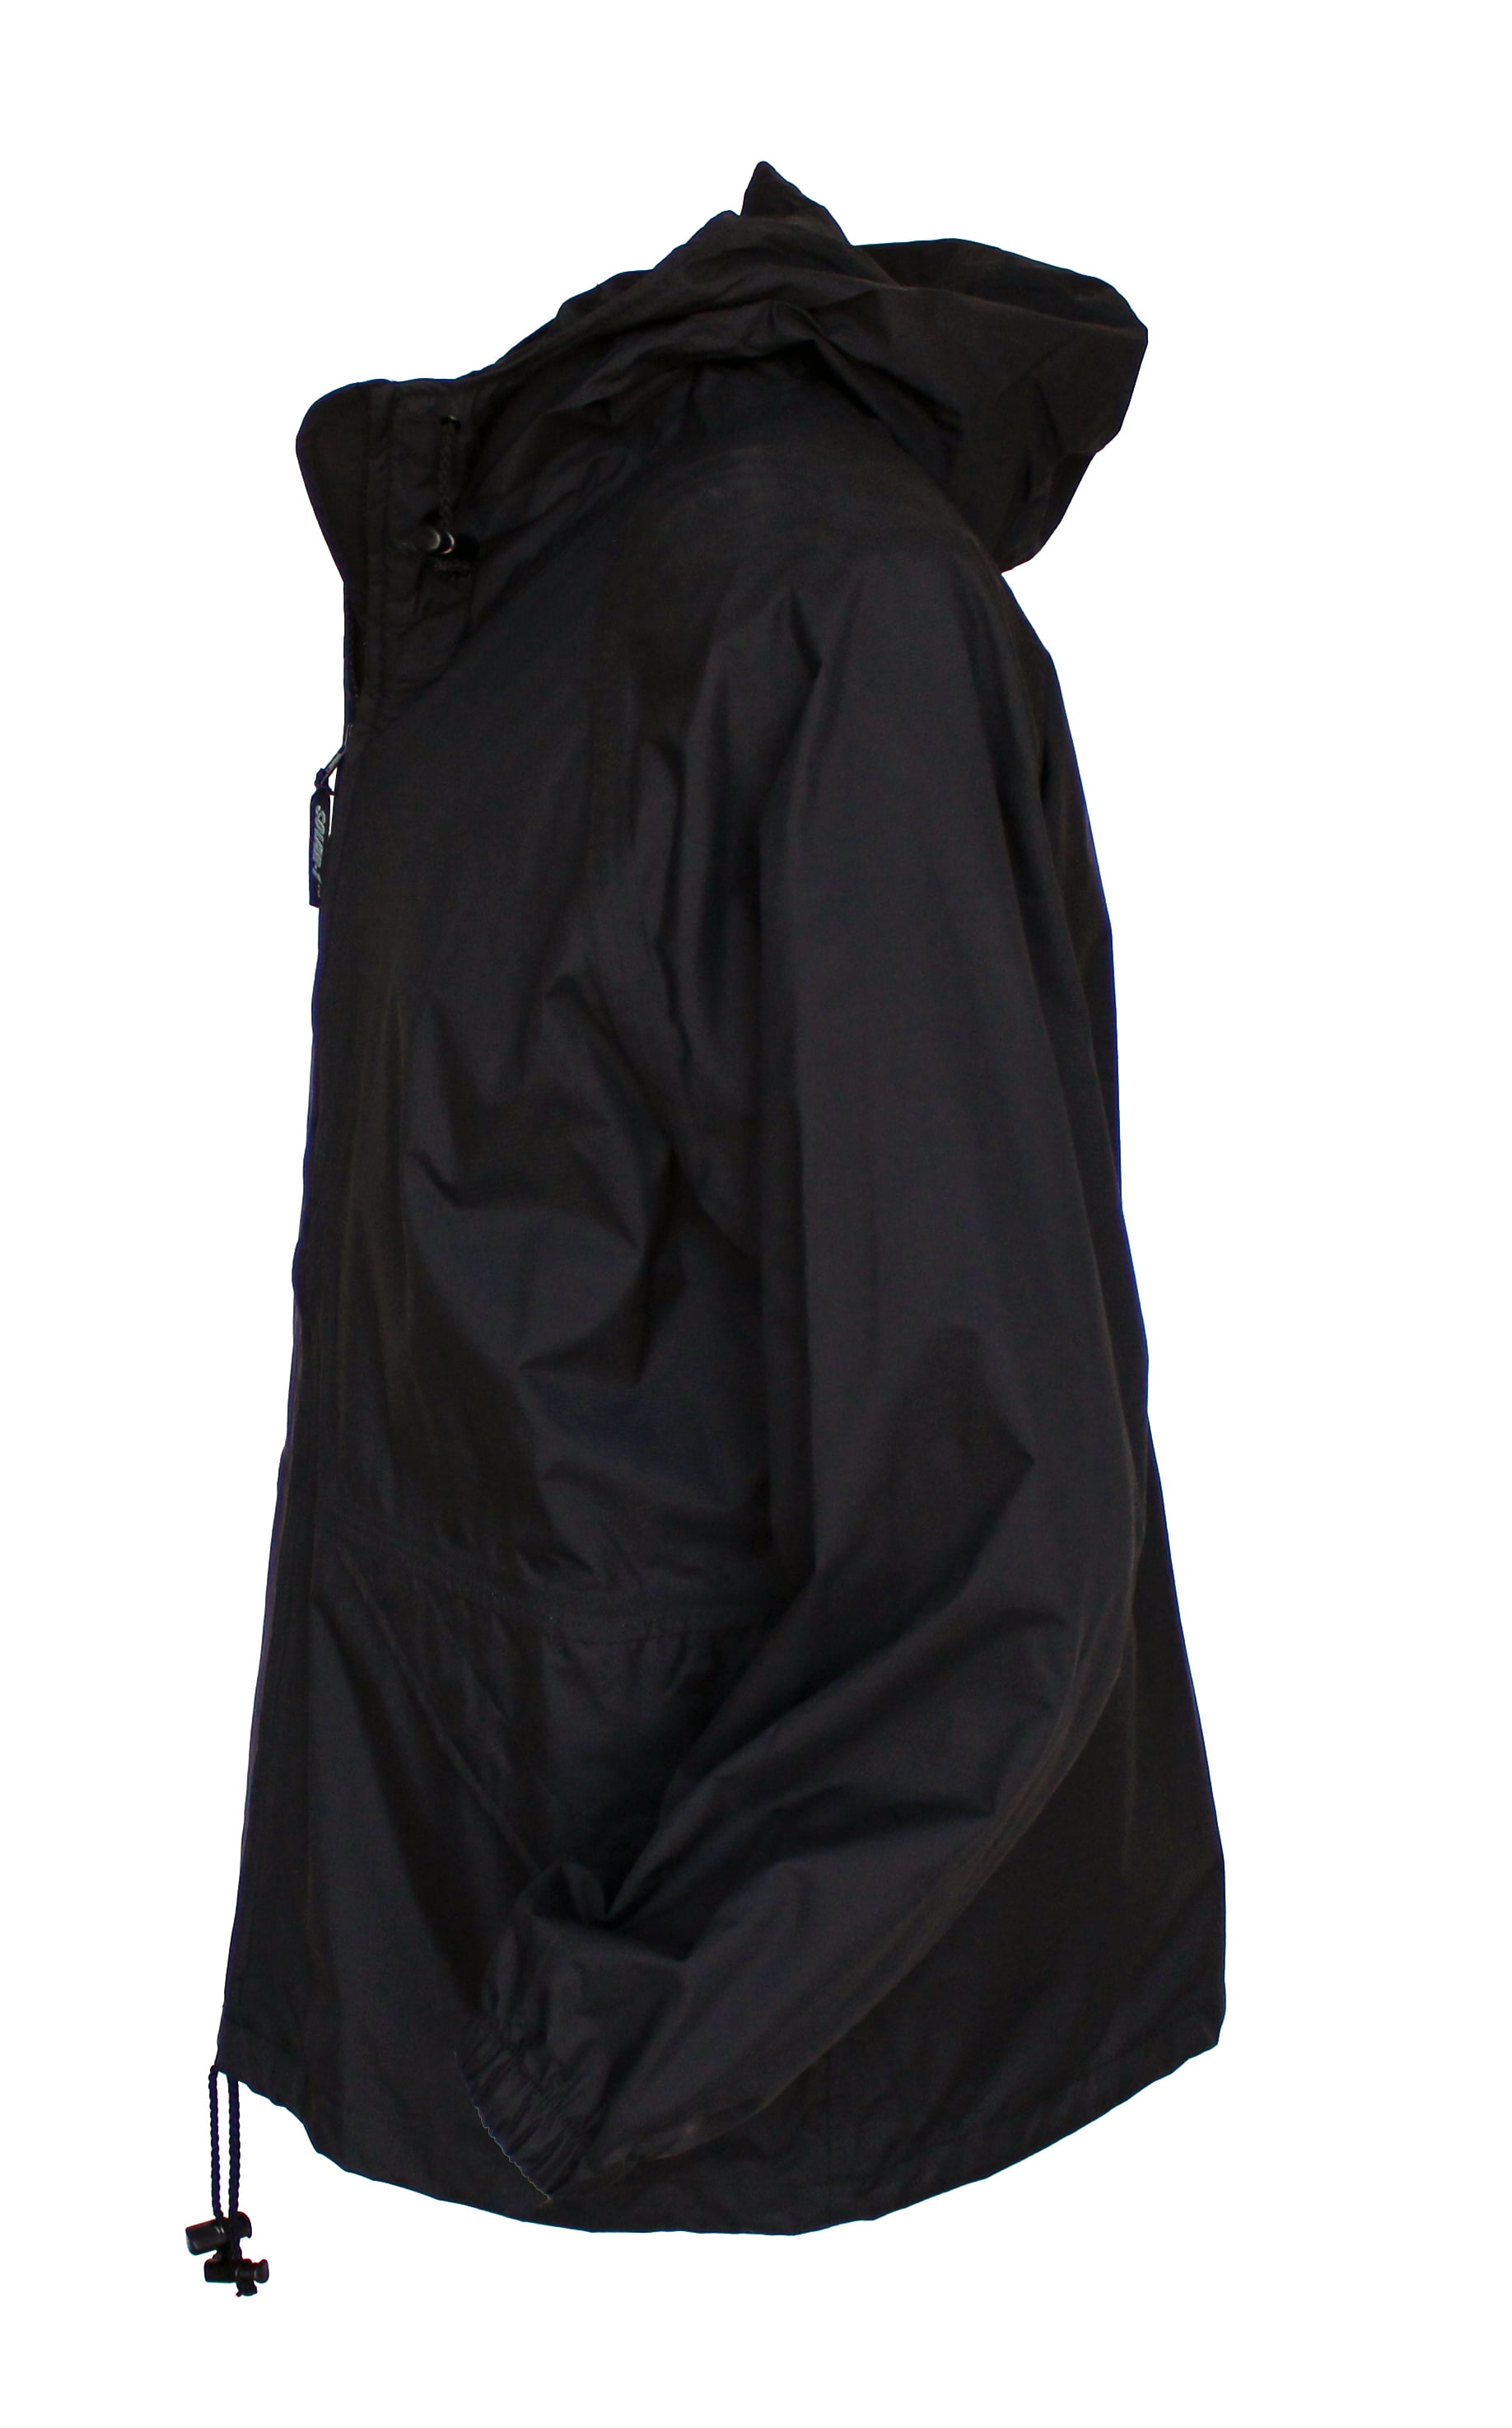 Solar 1 Clothing Rain Jacket RJ01 